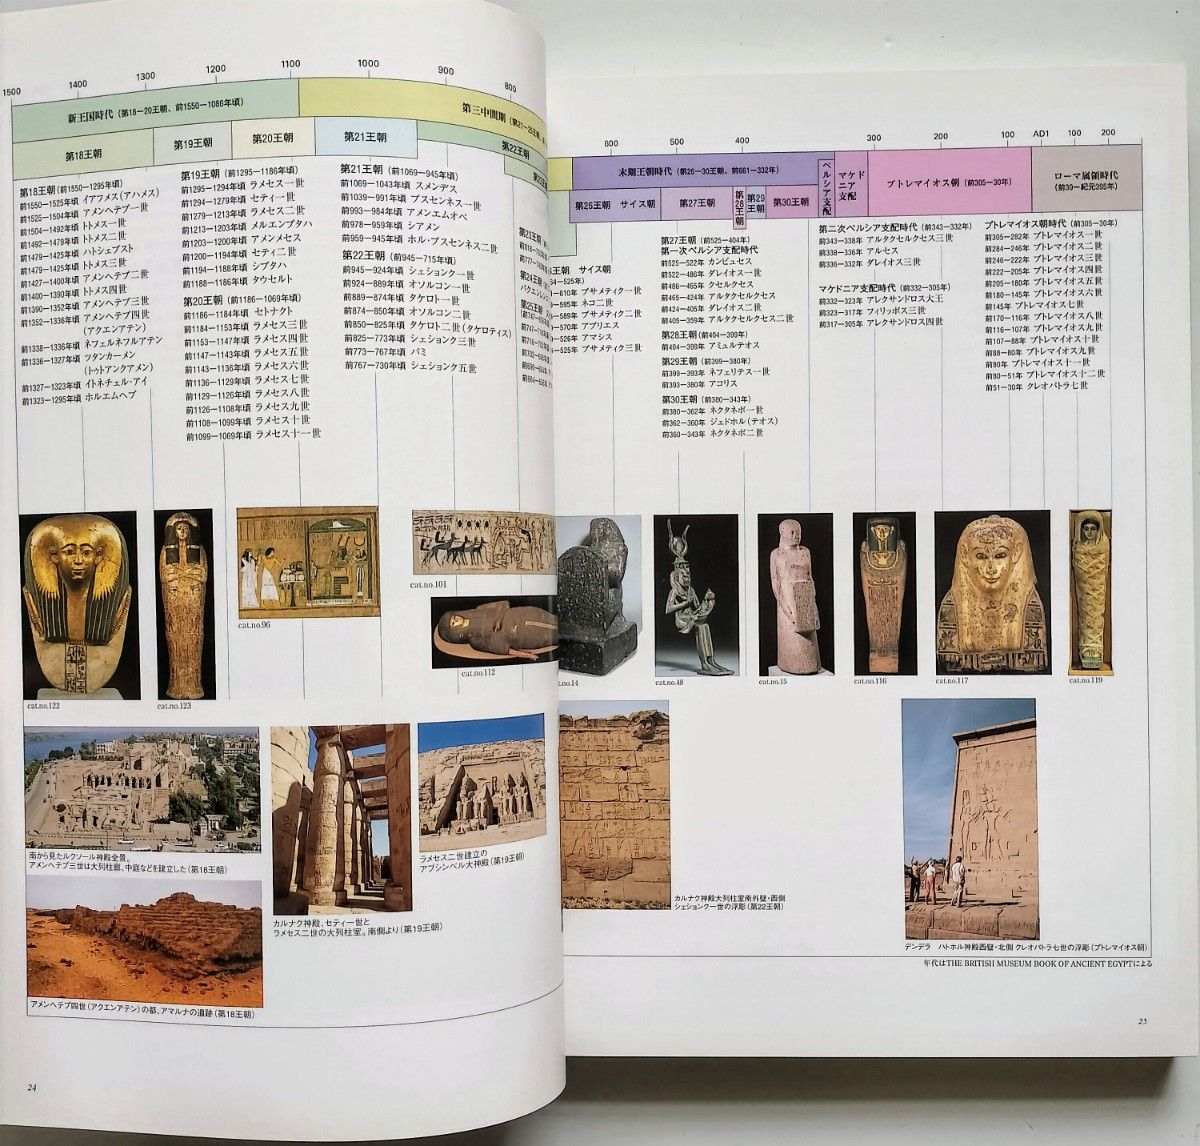 bz.  「大英博物館古代エジプト展」図録 : 永遠の美と生命